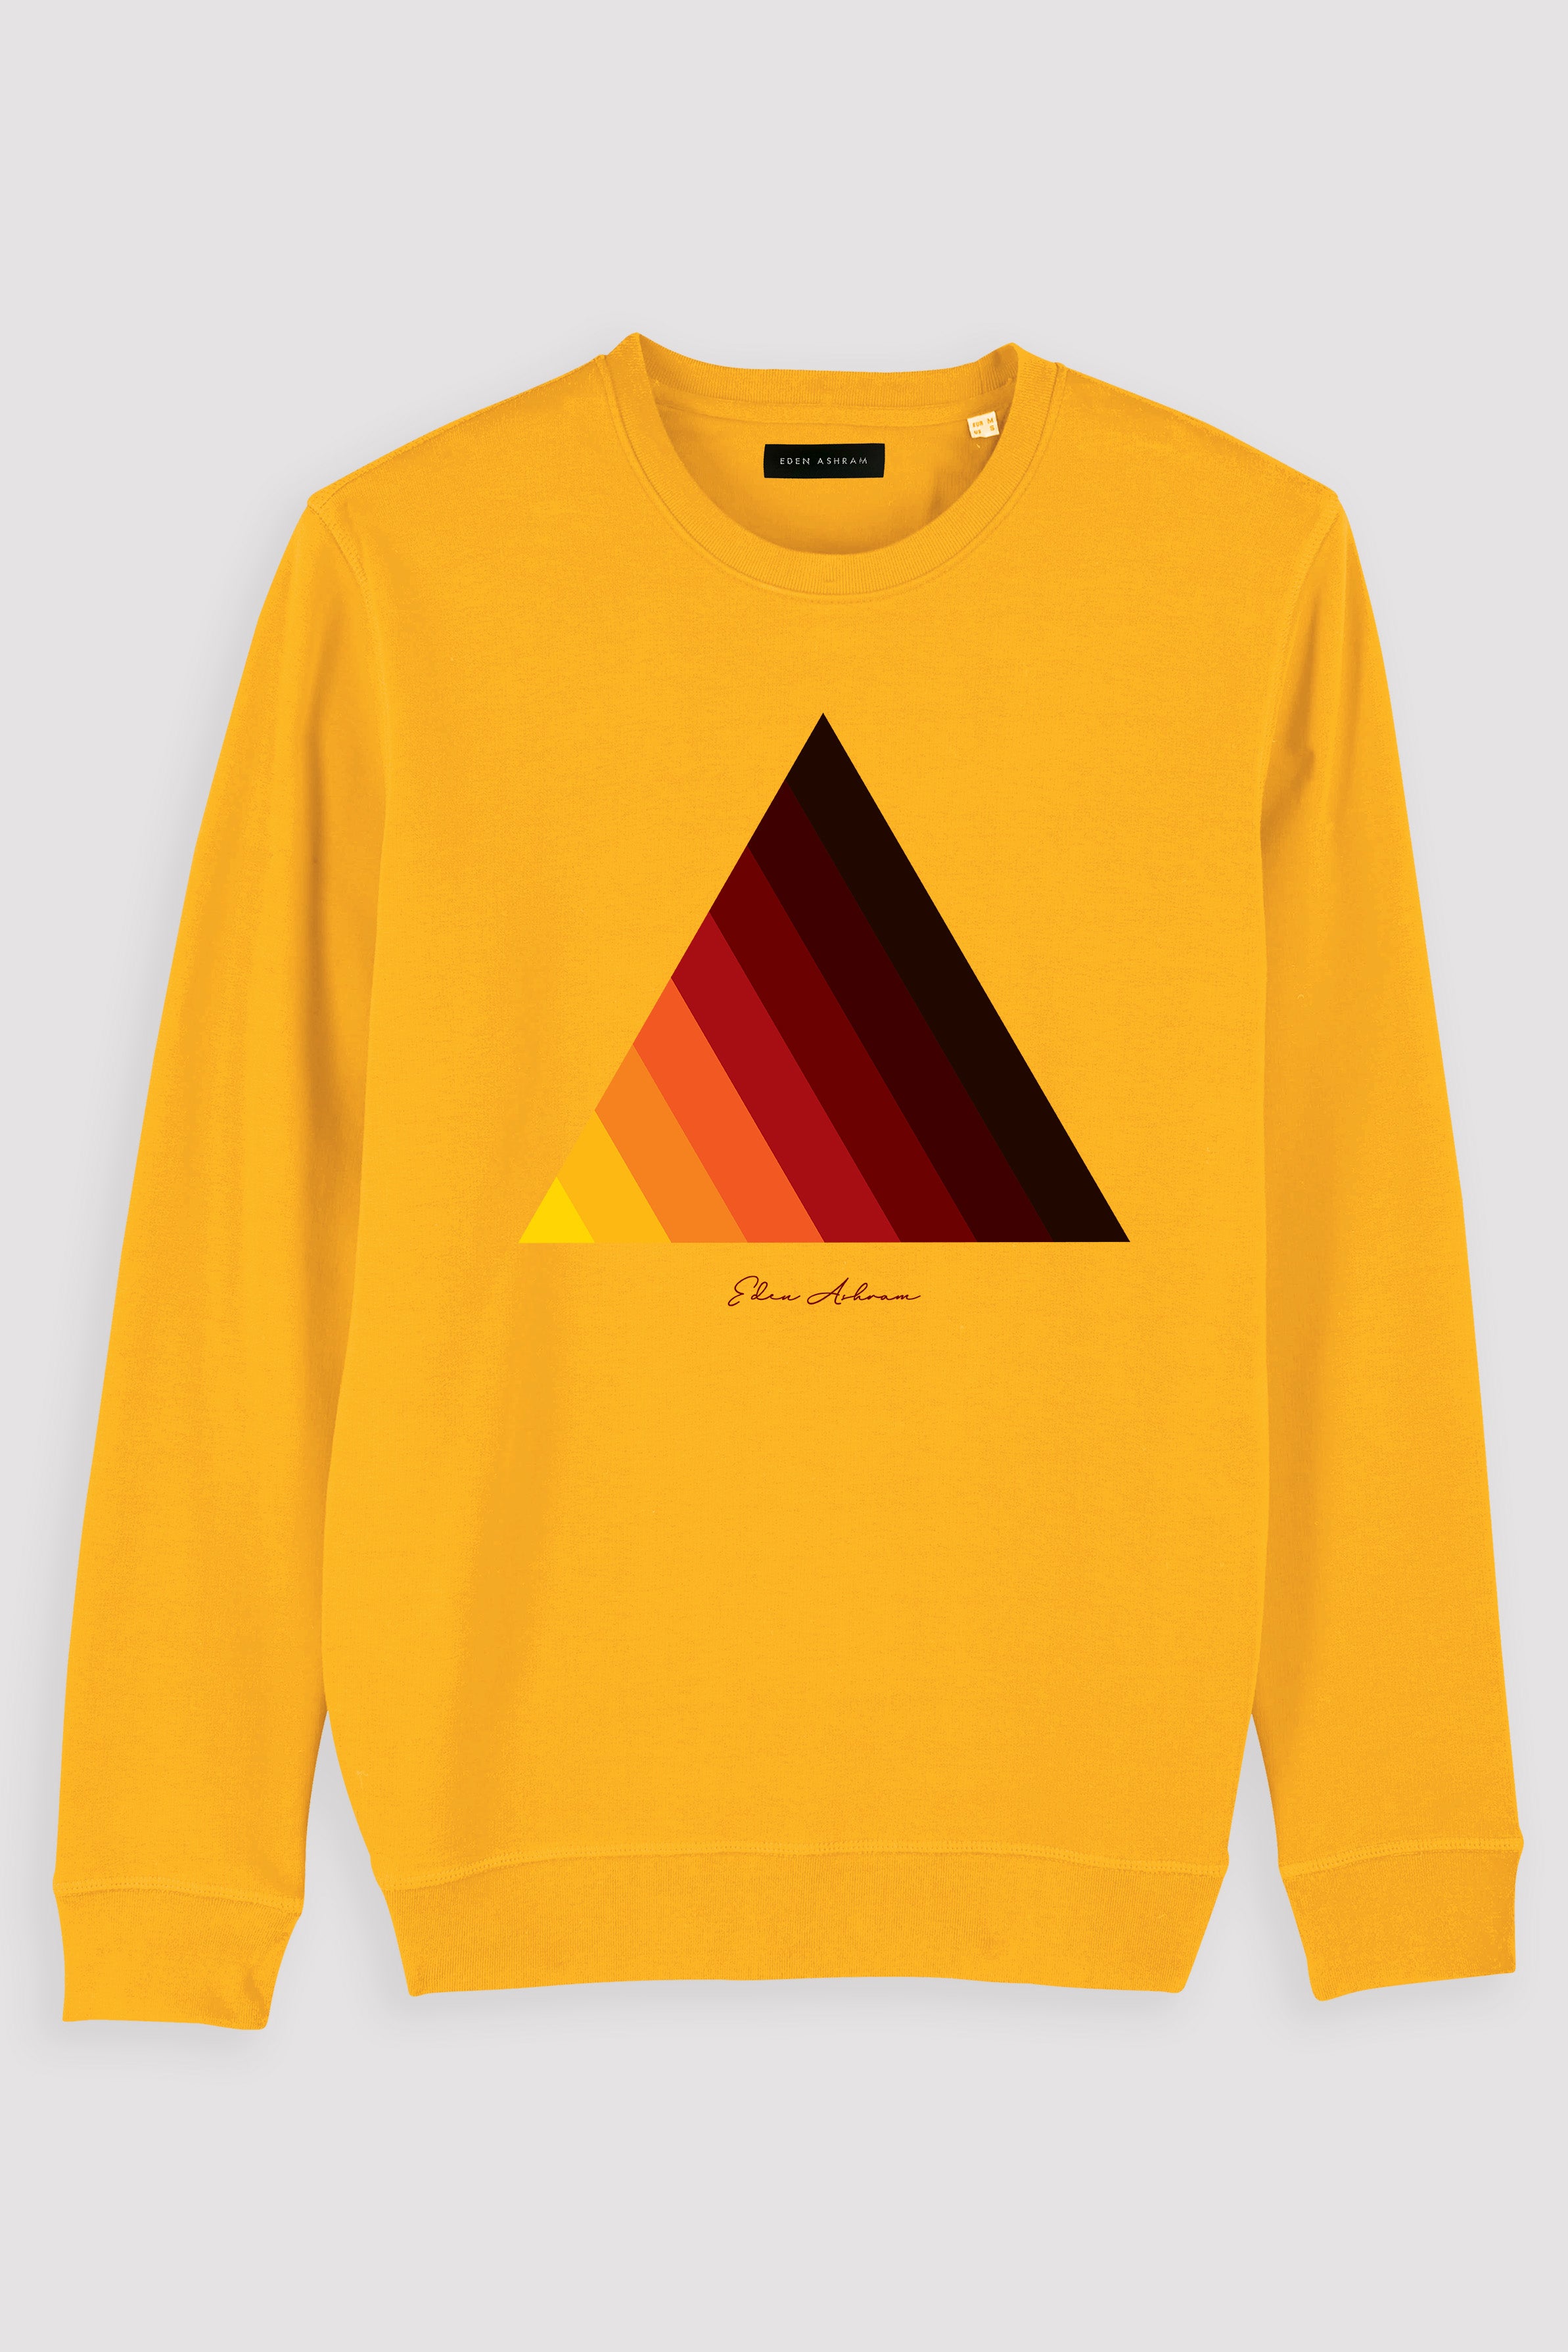 EDEN ASHRAM Retro Pyramid Premium Crew Neck Sweatshirt Spectra Yellow